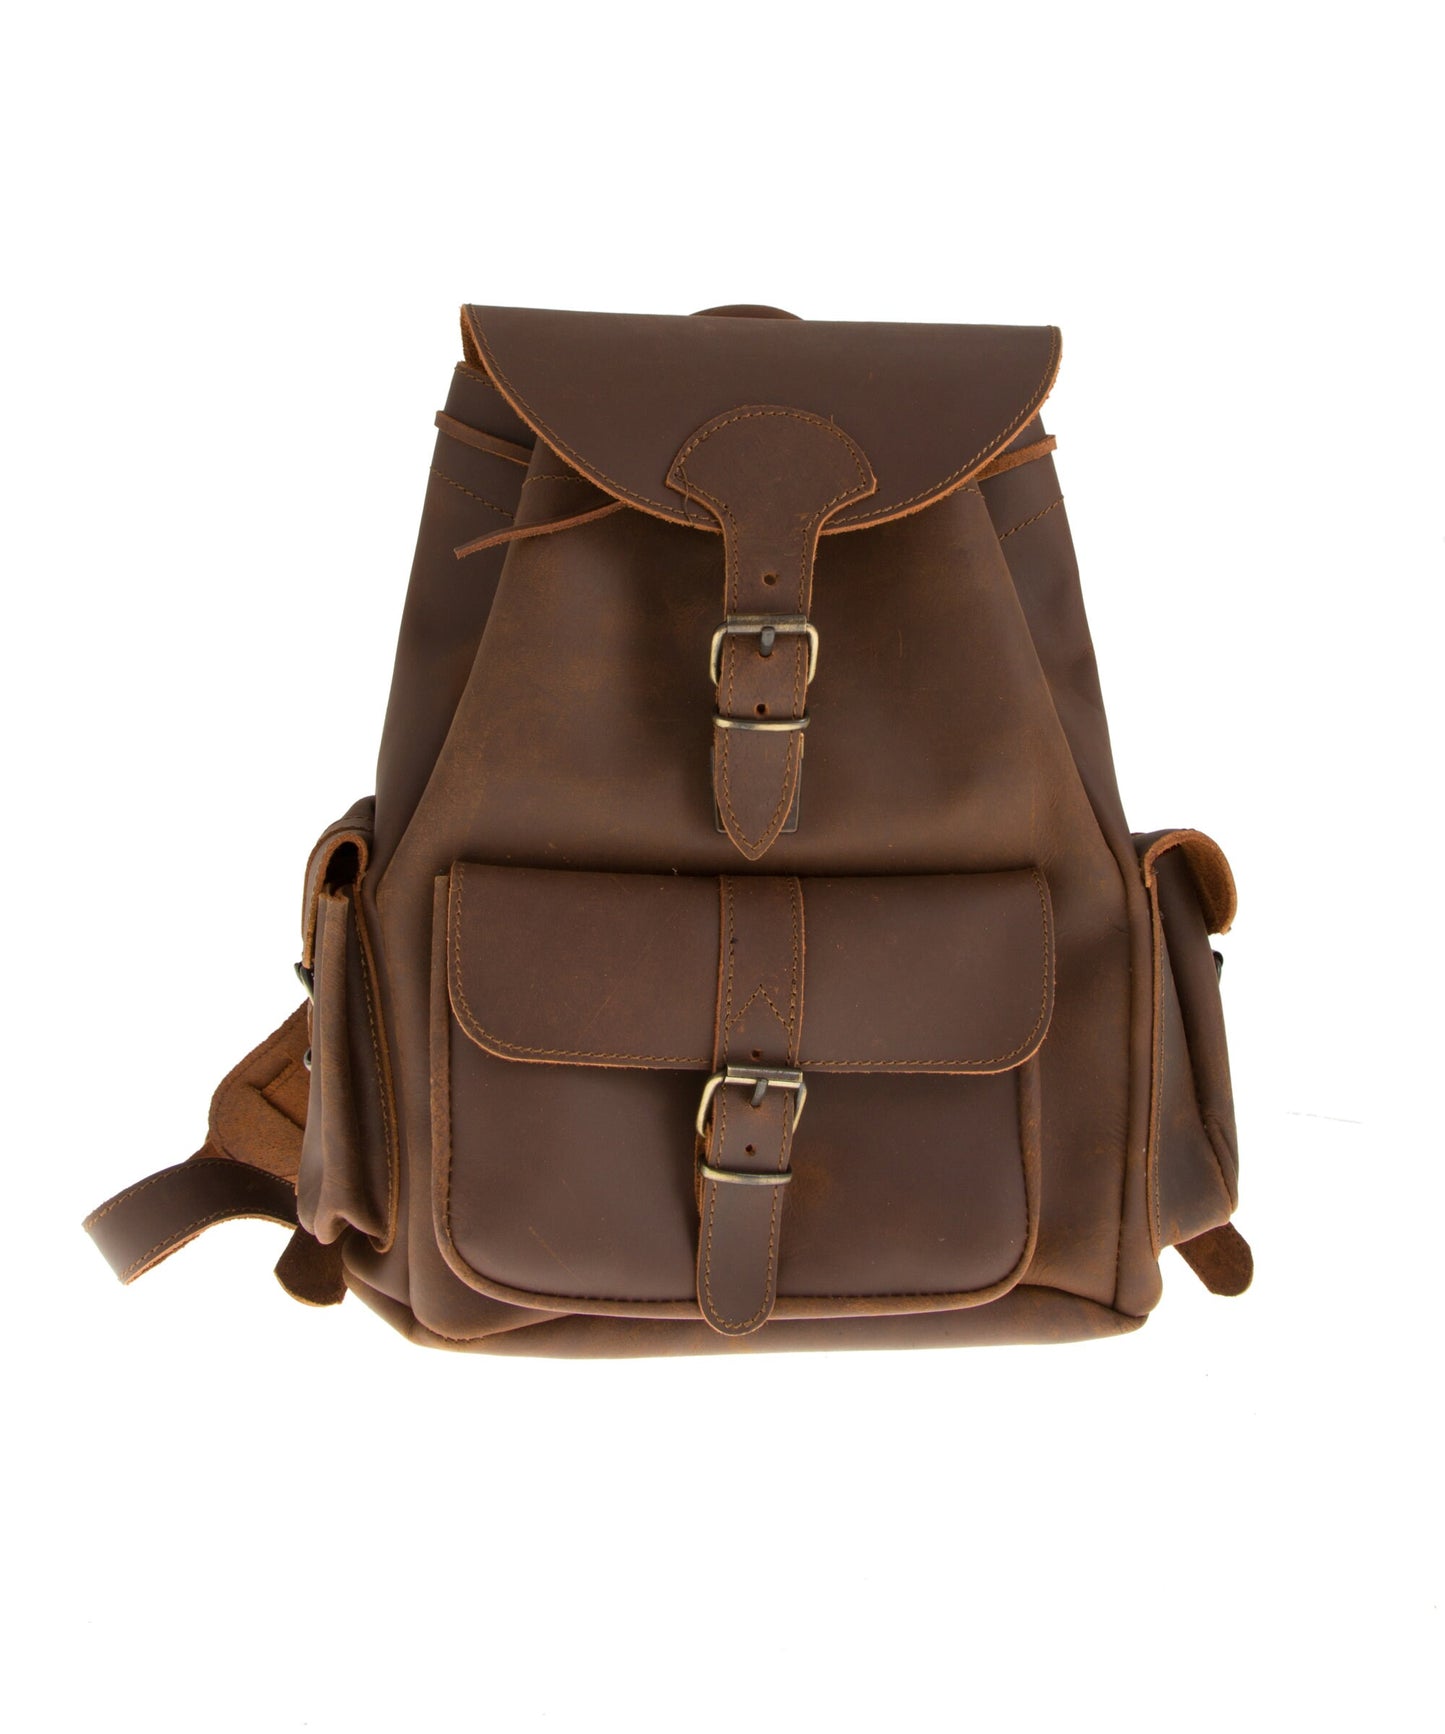 Leather backpack women, Full grain leather backpack, Boho leather backpack, Rucksack damen, Lederrucksack damen